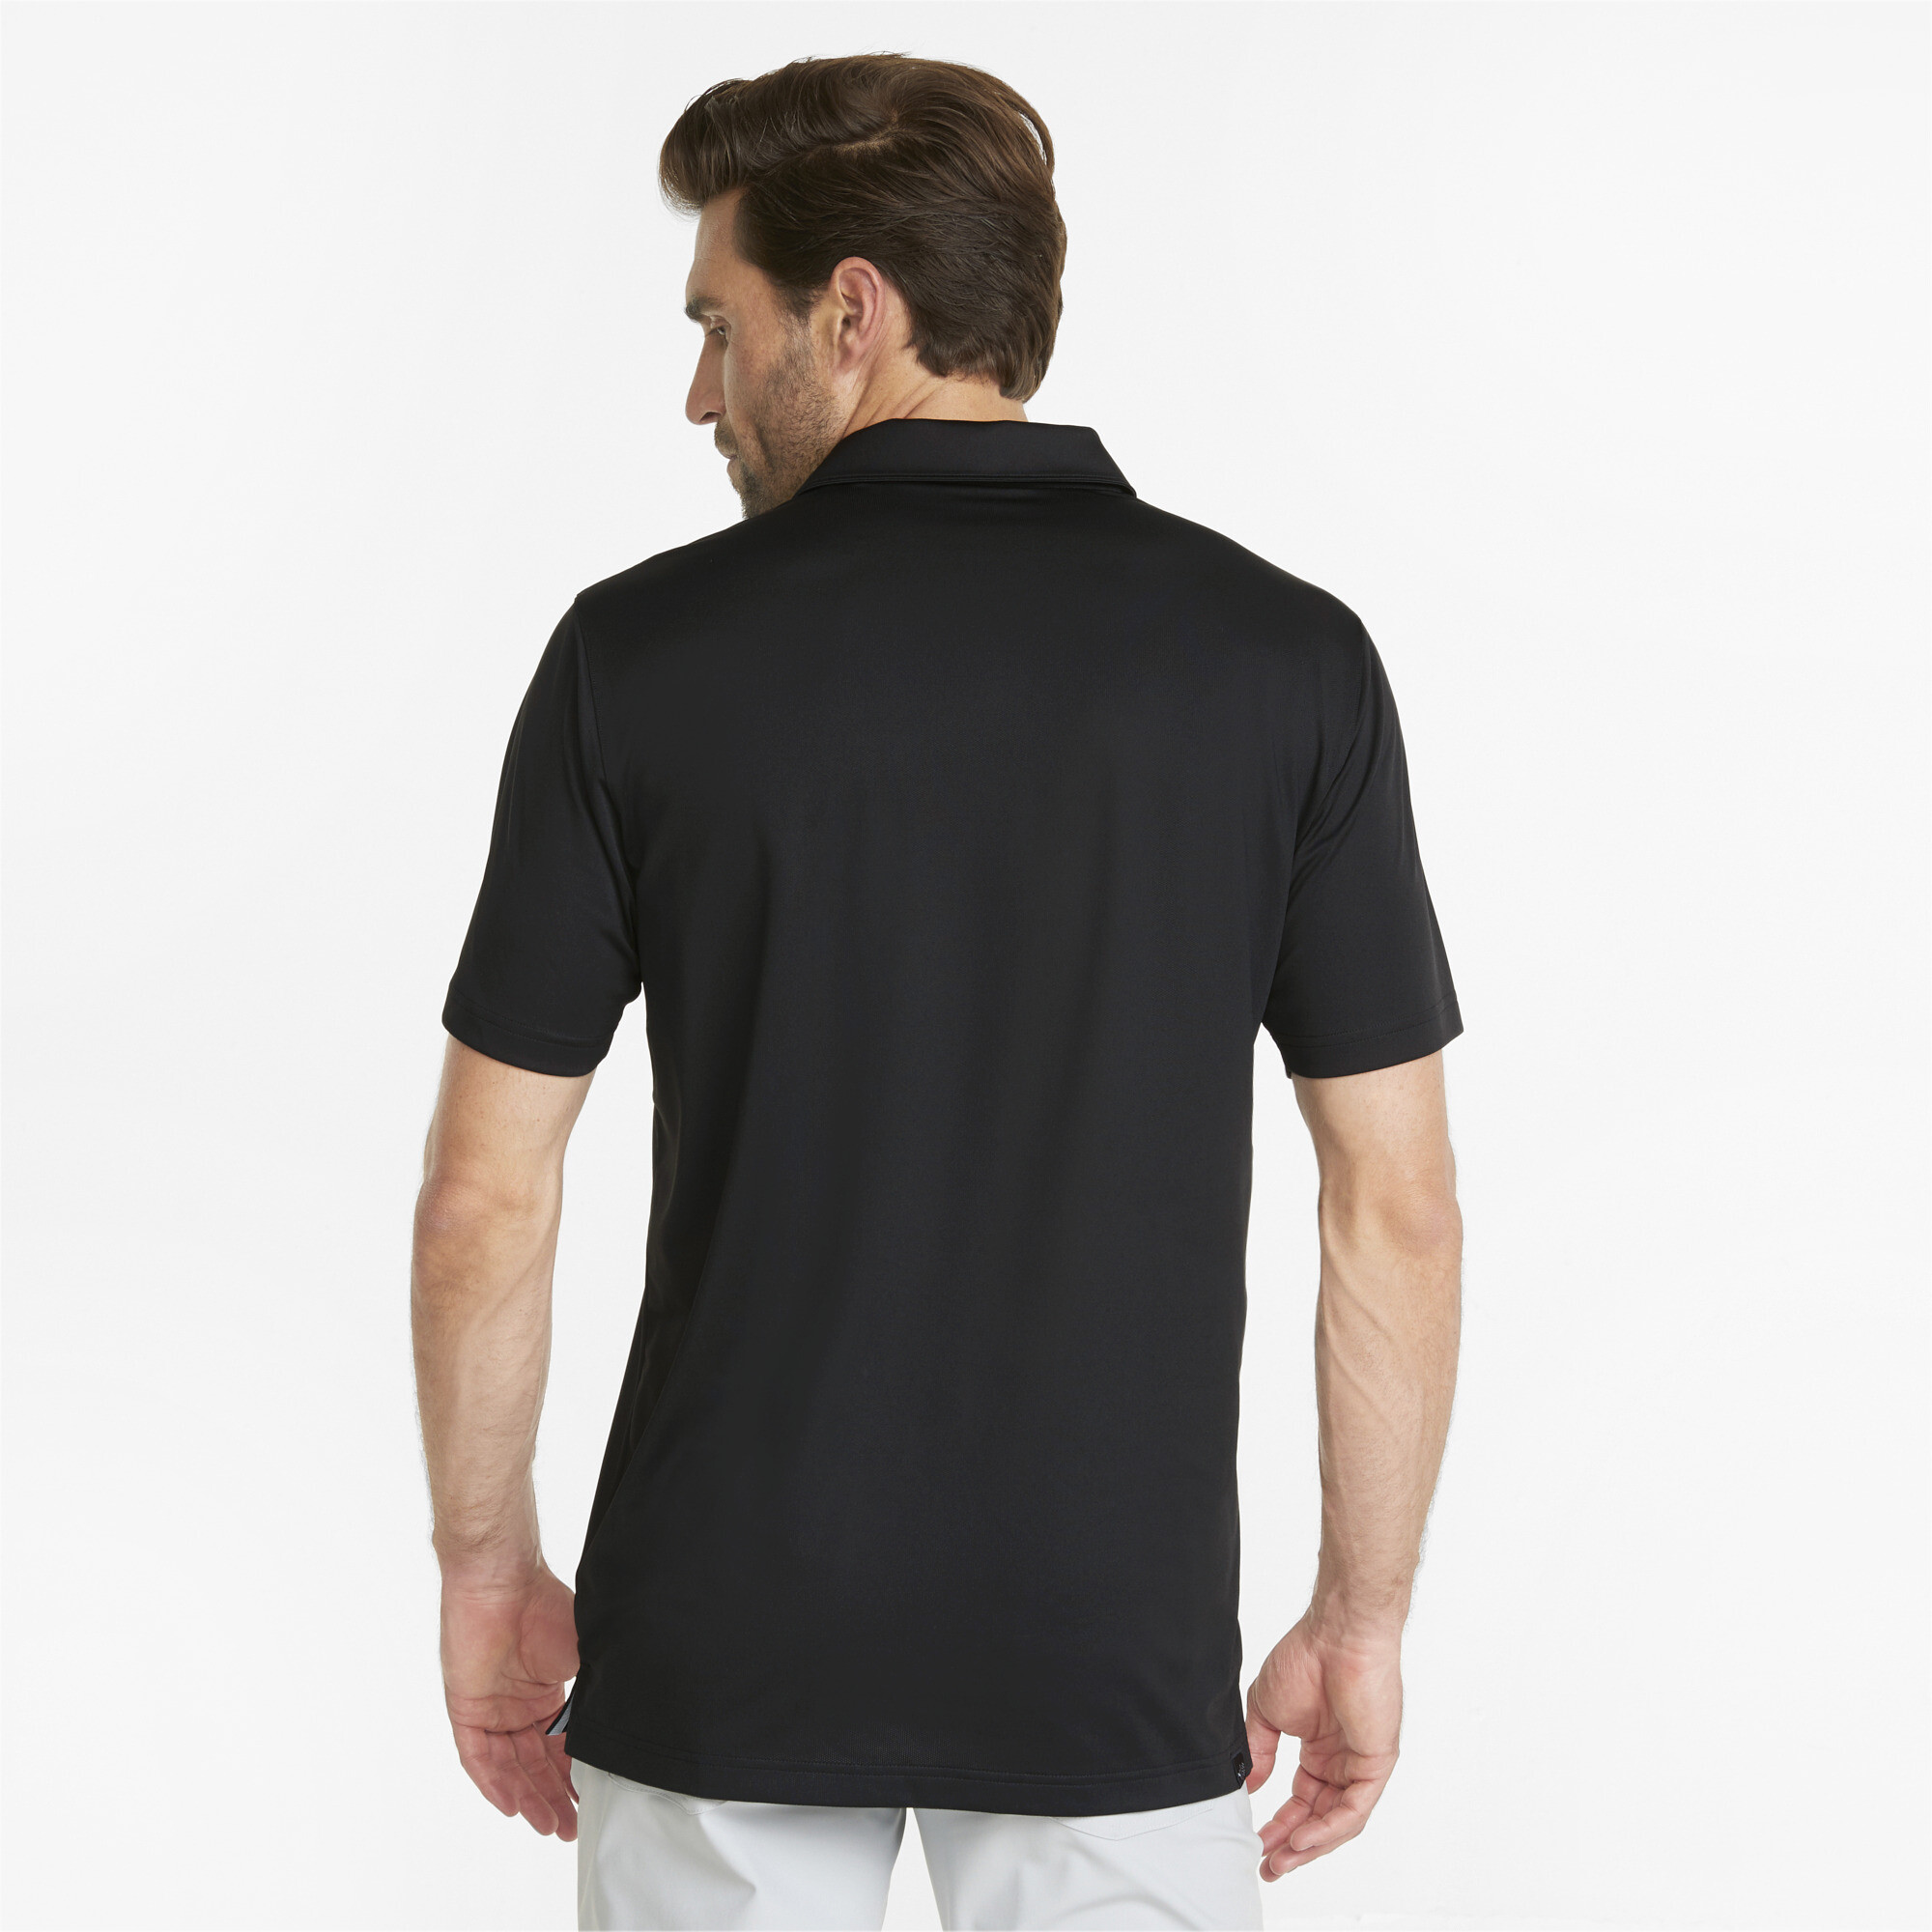 Men's Puma Gamer's Golf Polo Shirt T-Shirt, Black T-Shirt, Size 6XL T-Shirt, Clothing